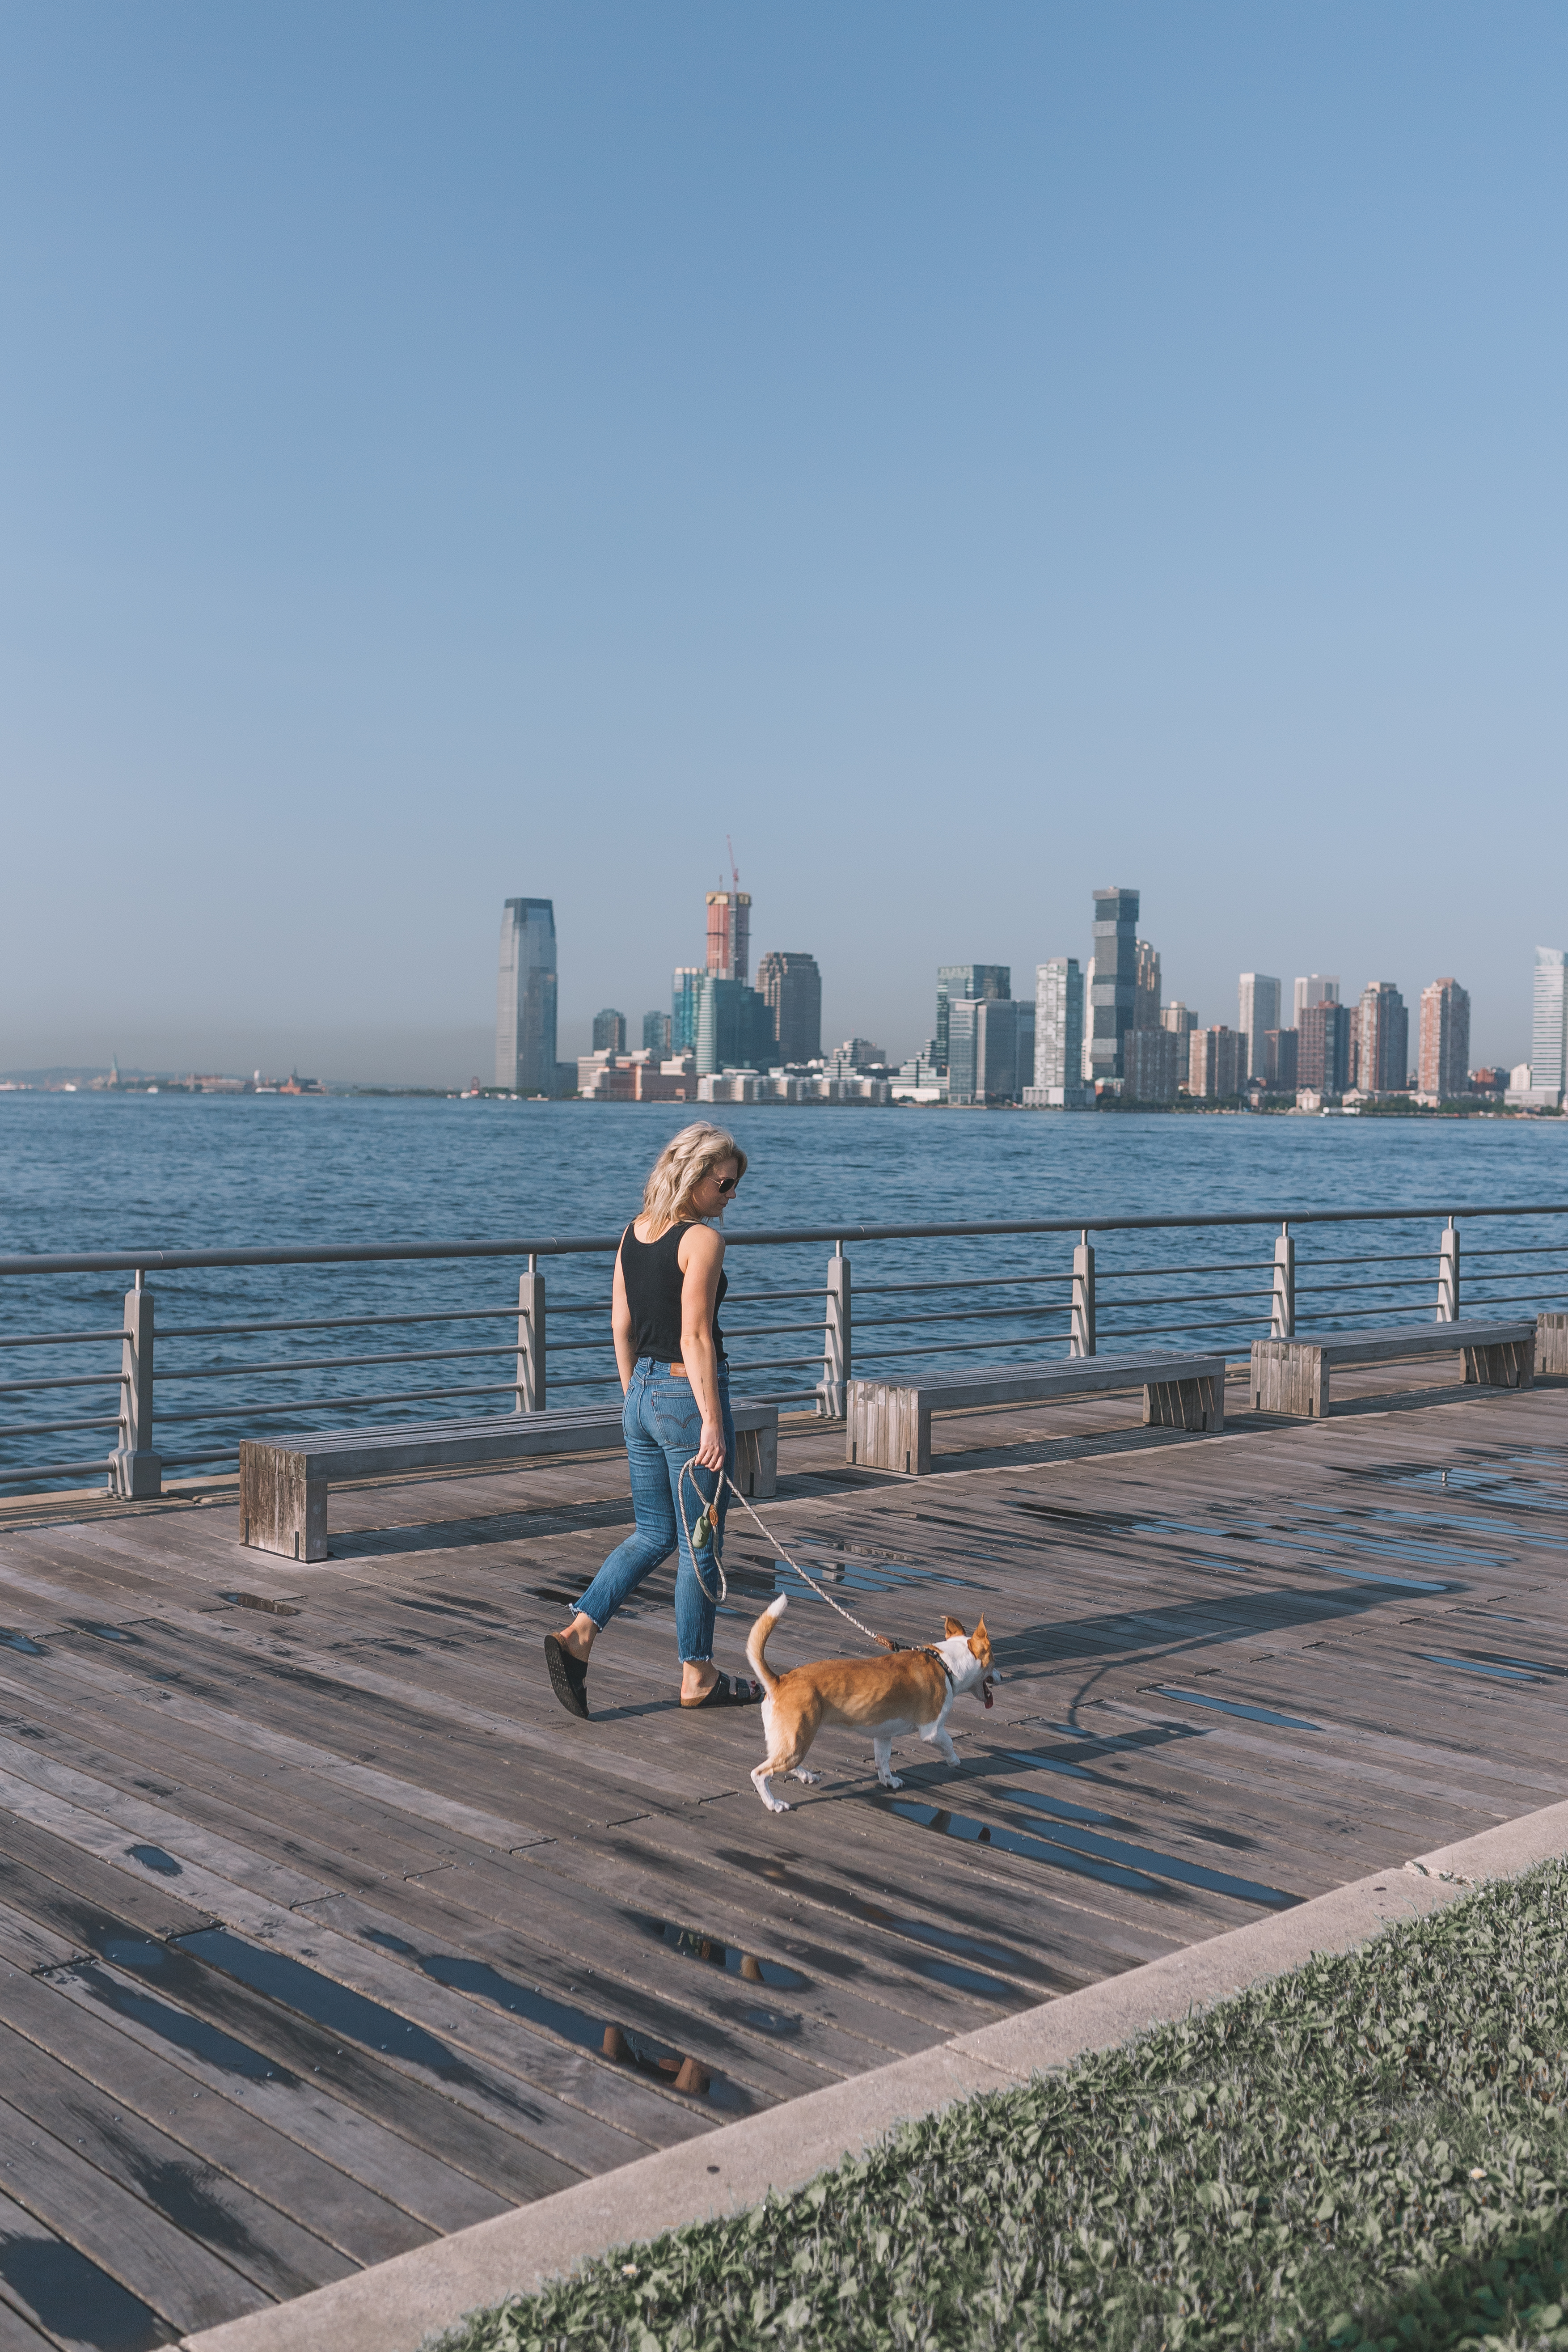 Favorite Dog-Friendly Spots in New York City.